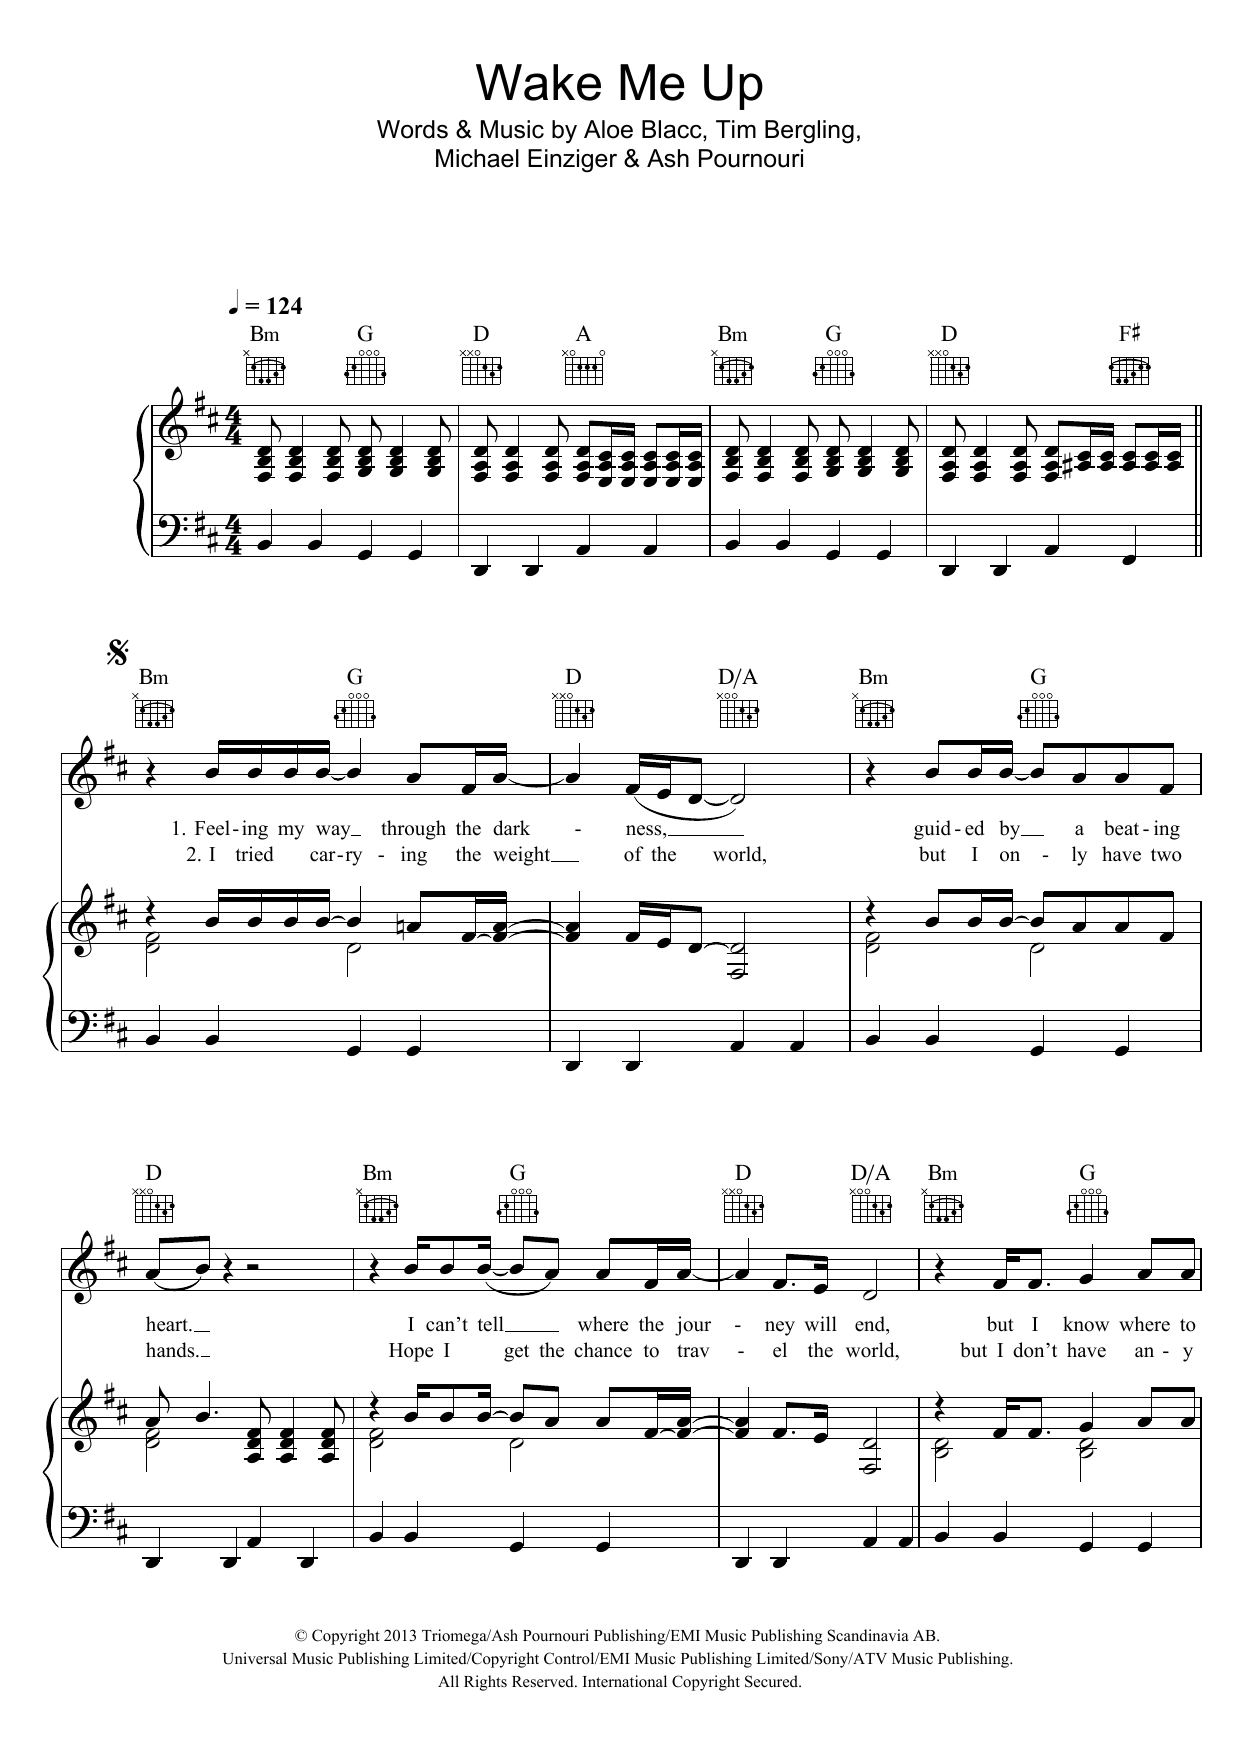 Avicii Wake Me Up Sheet Music Notes & Chords for Keyboard - Download or Print PDF